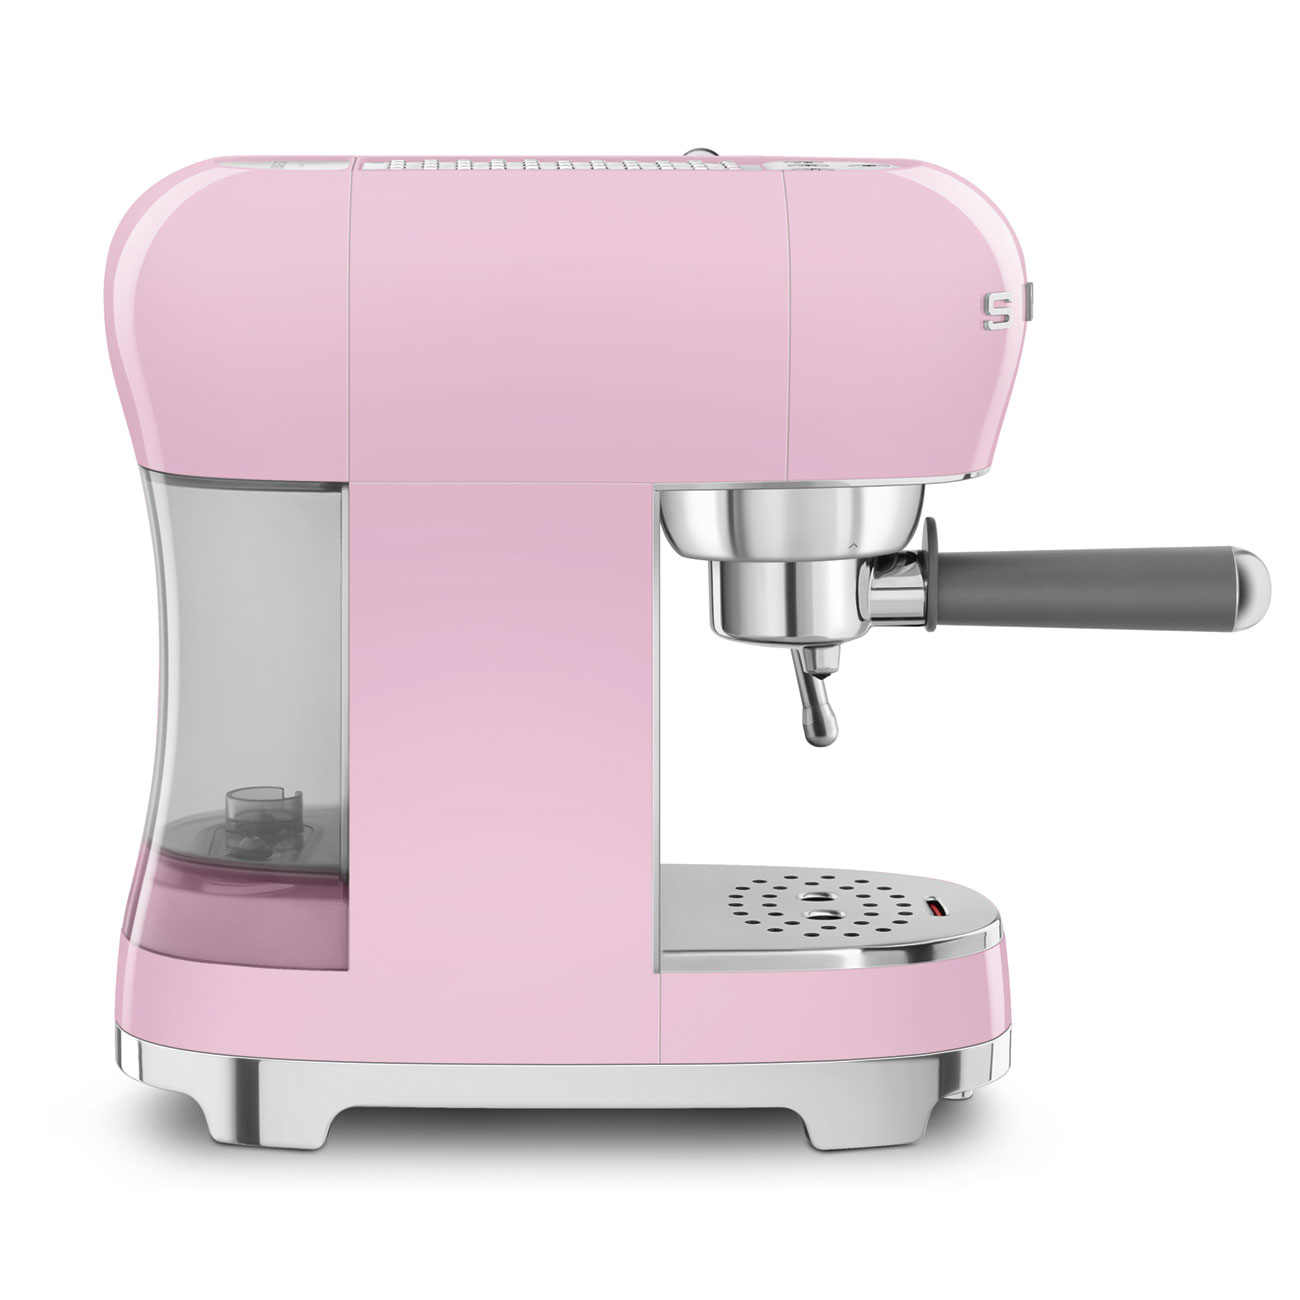 Smeg Pink Espresso Manual Coffee Machine with Steam Wand_7